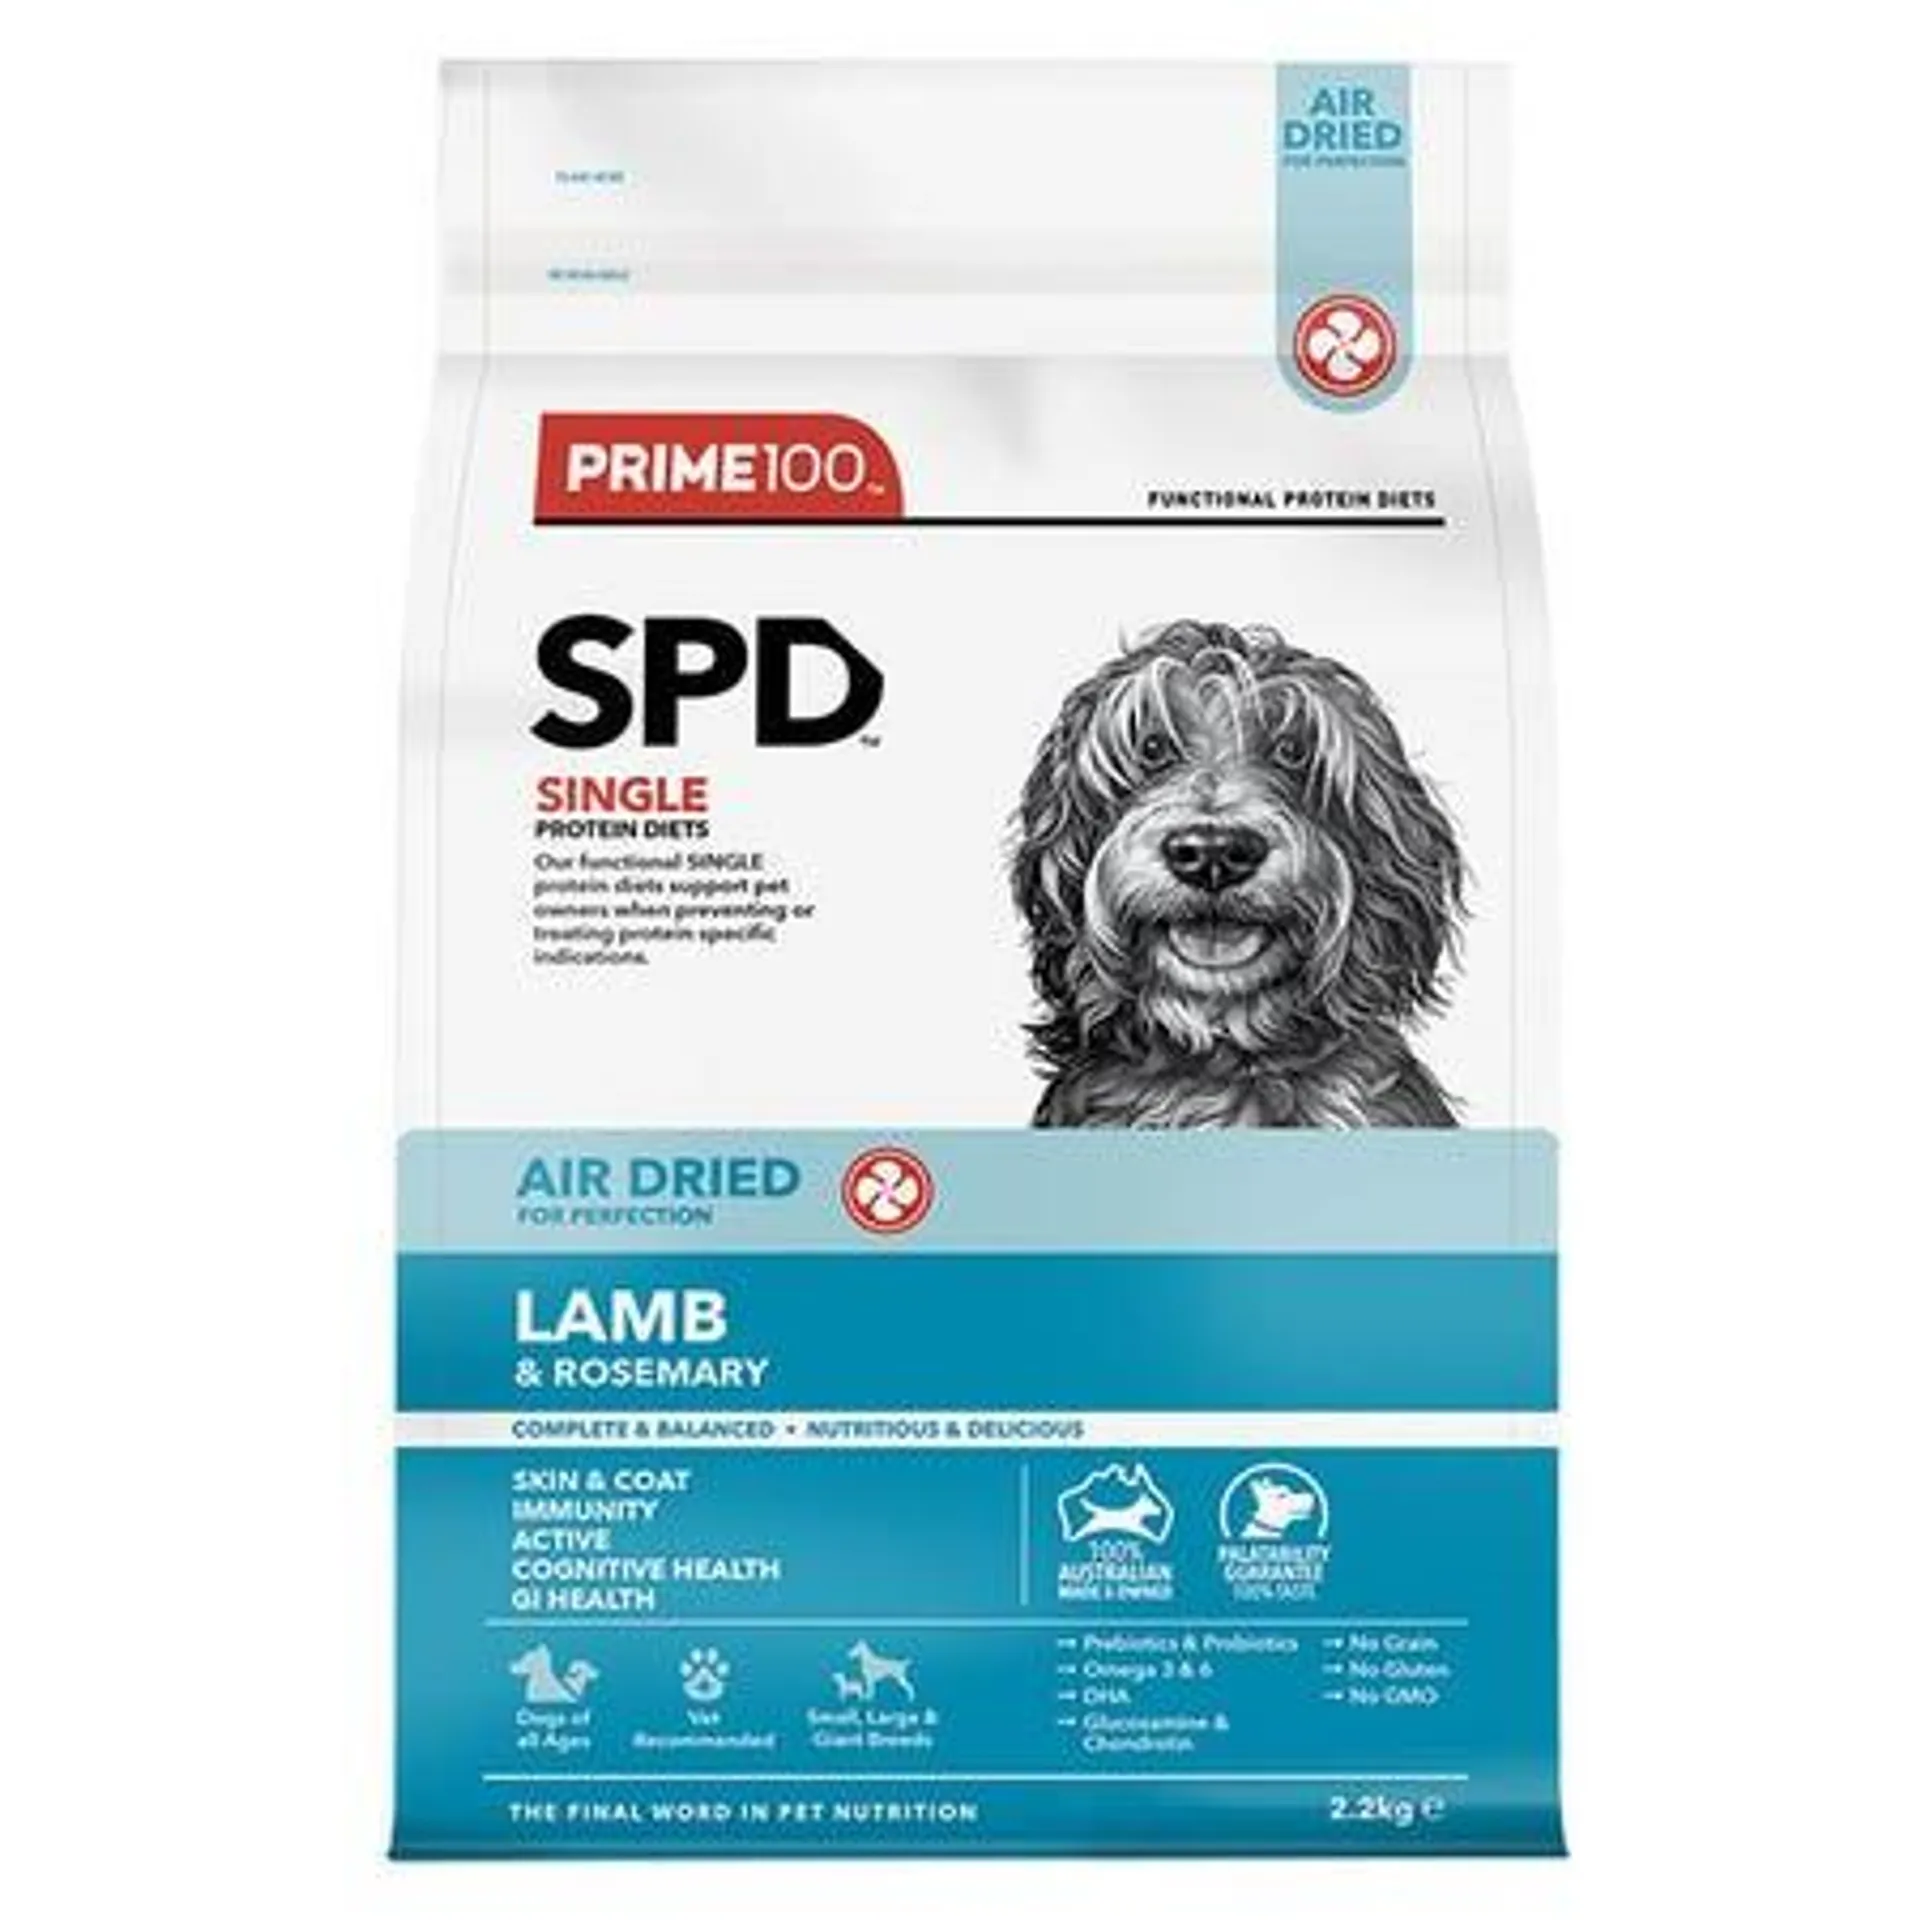 Prime100 Air Dried Lamb & Rosemary Adult Dog Food